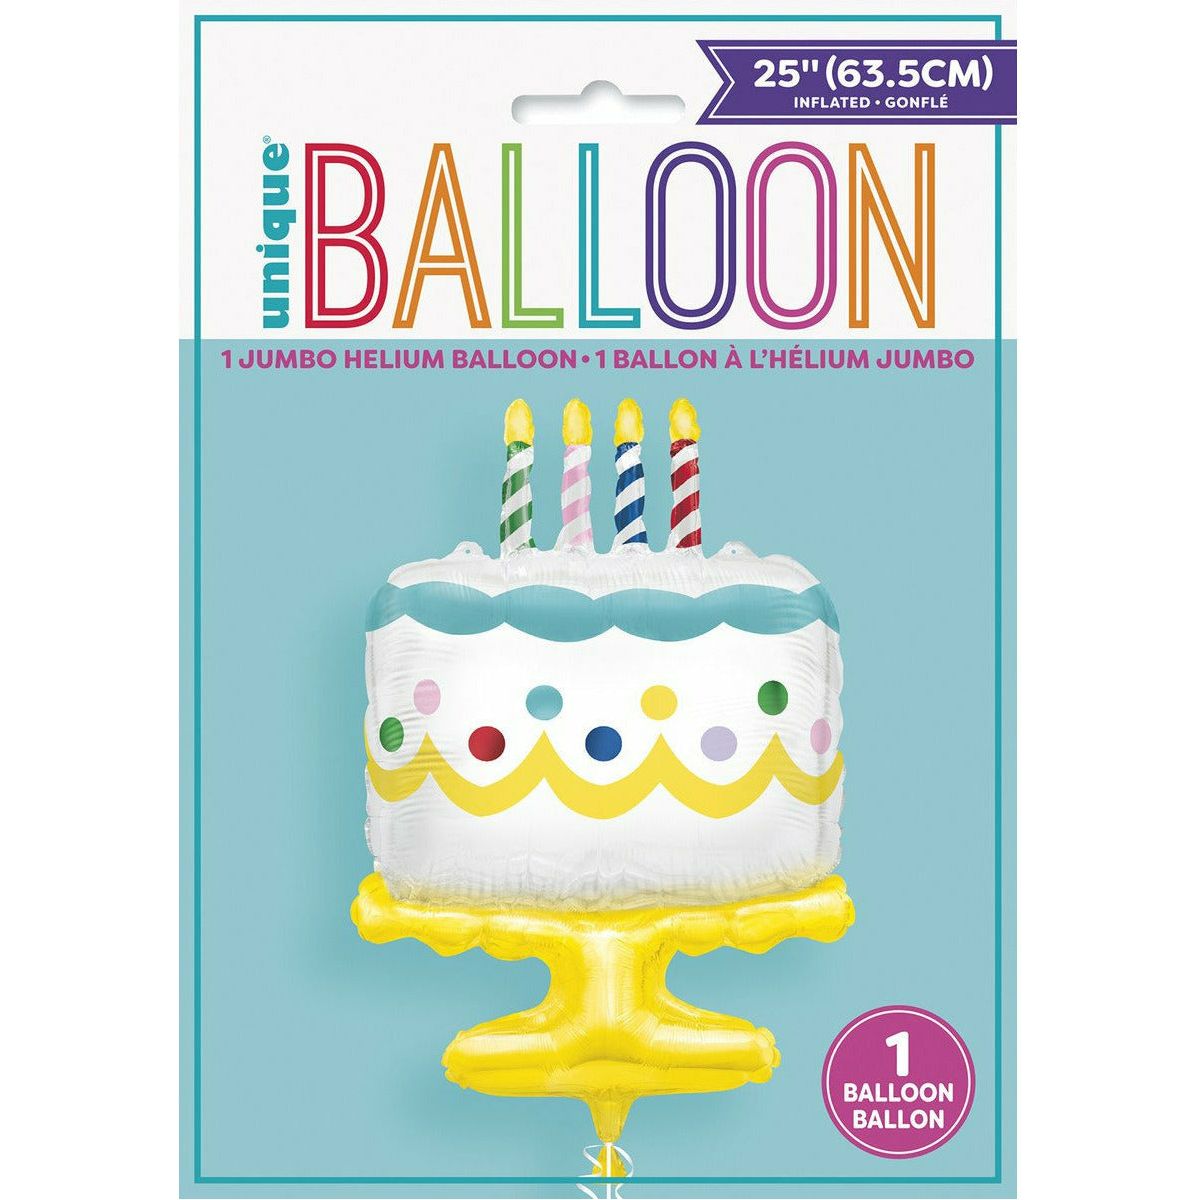 Giant Birthday Cake Foil Balloon 63cm - Dollars and Sense